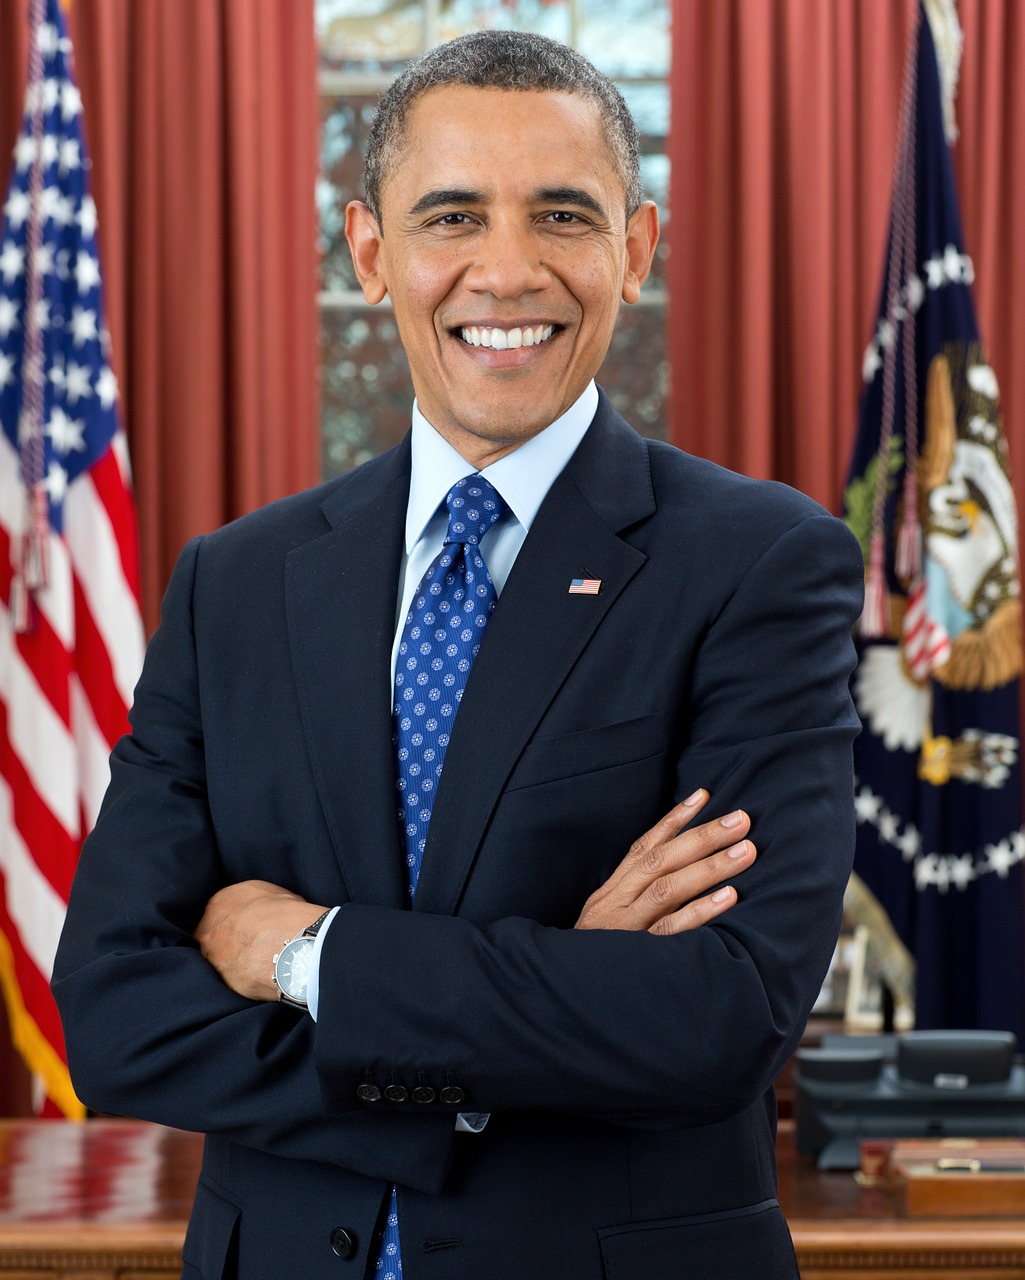 barack obama 2012 official portrait free photo